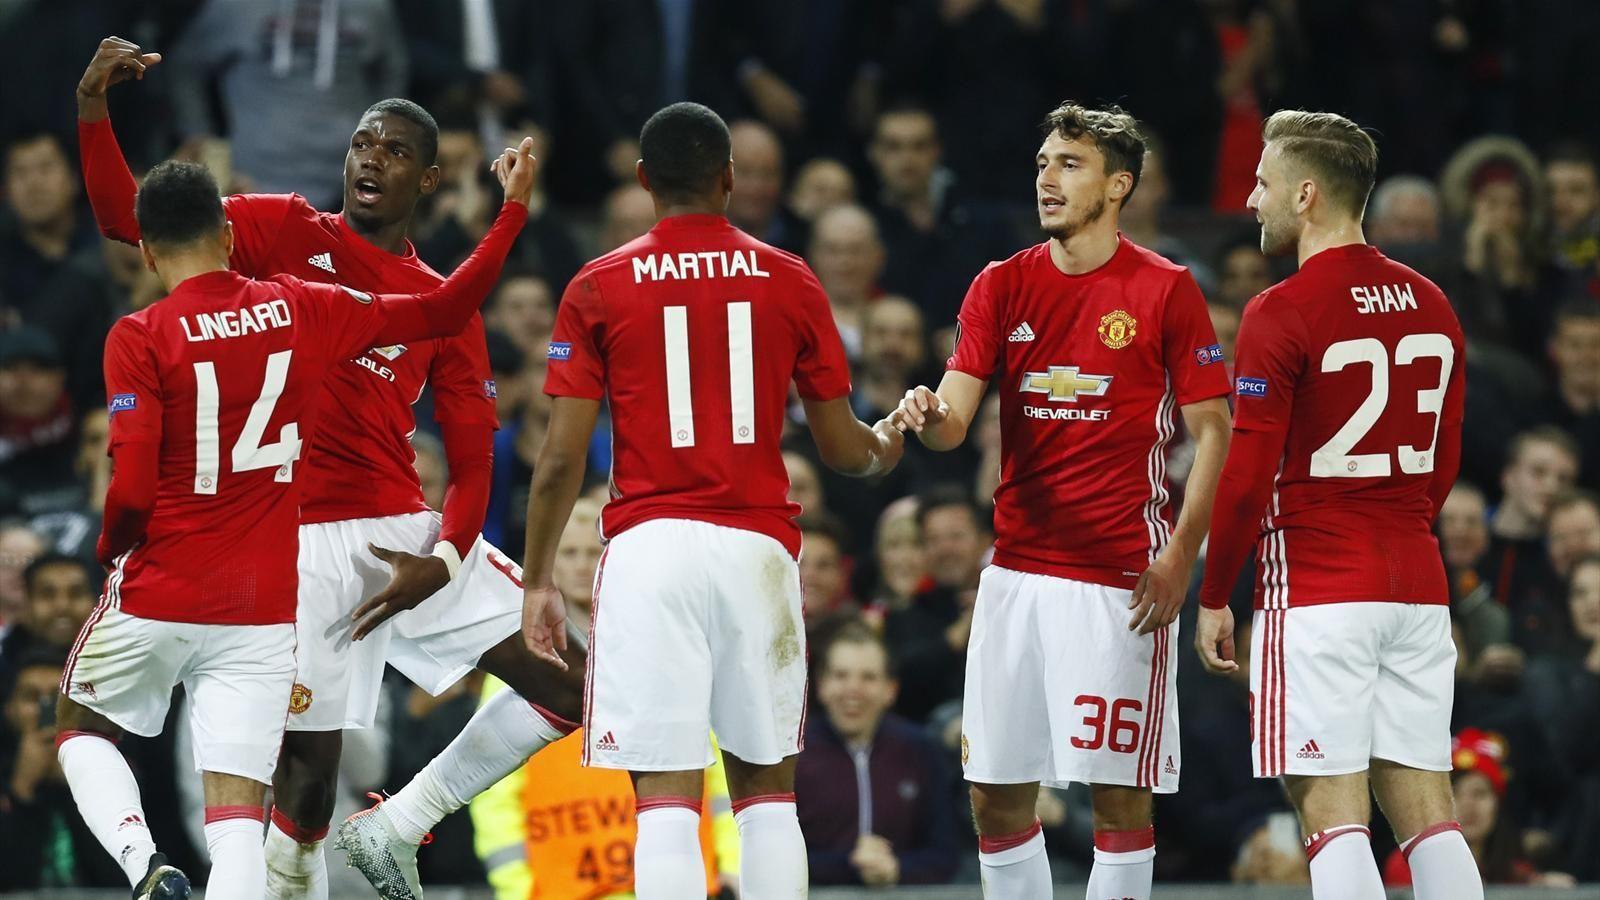 Paul Pogba bags brace as Manchester United thrash Fenerbahce